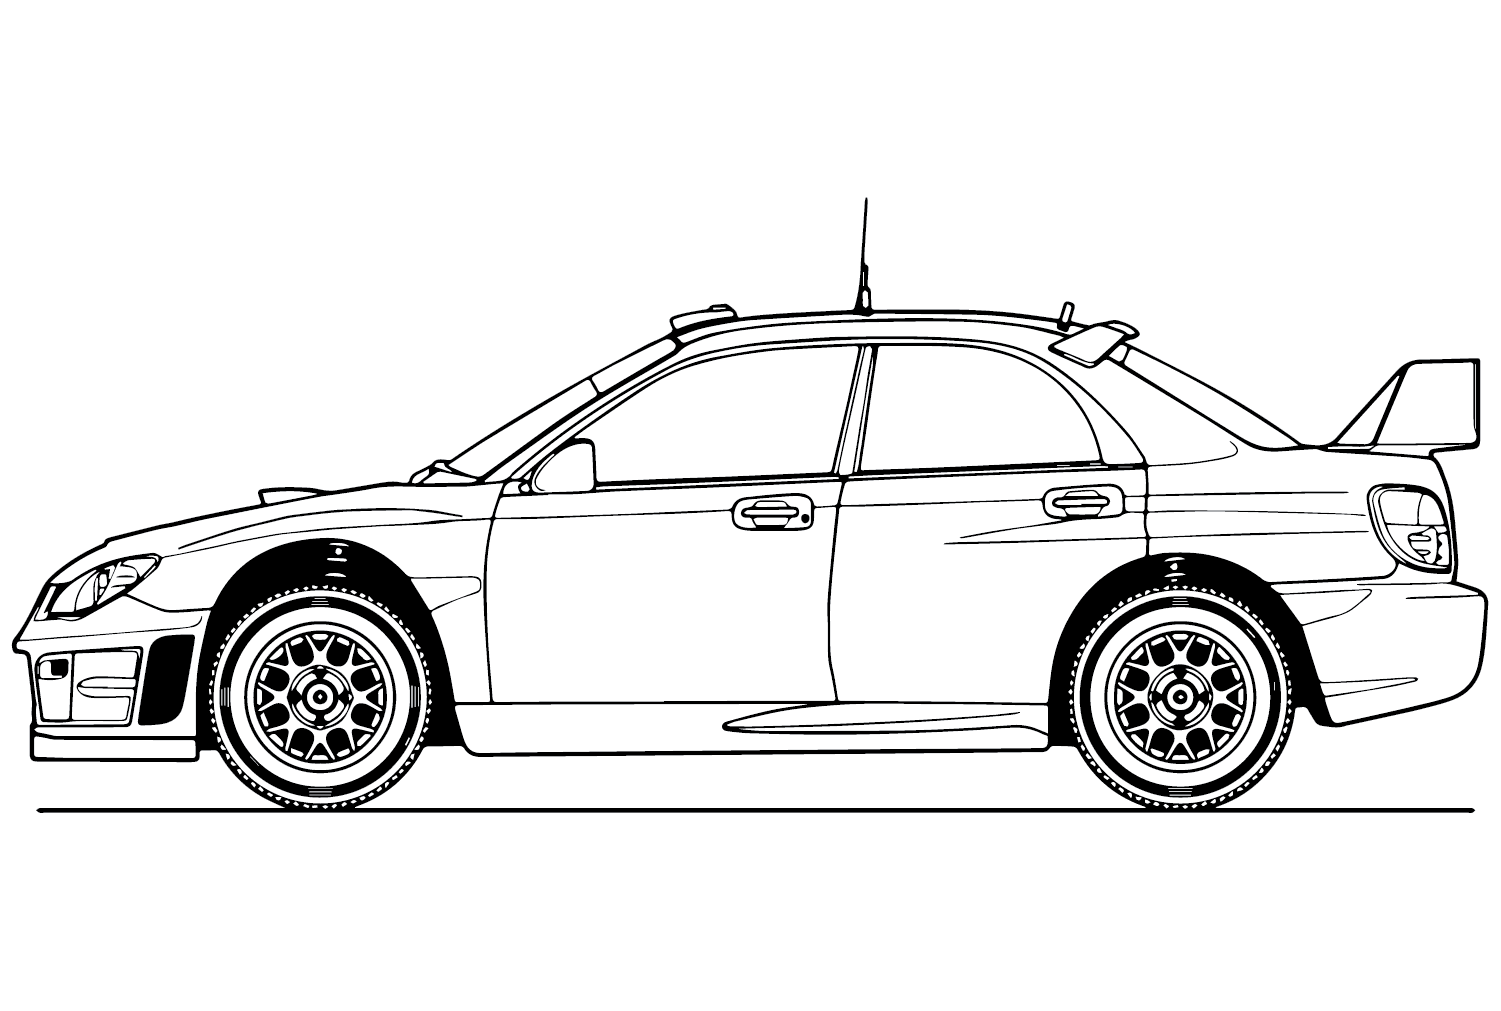 Subaru Impreza Coloring Page from Subaru